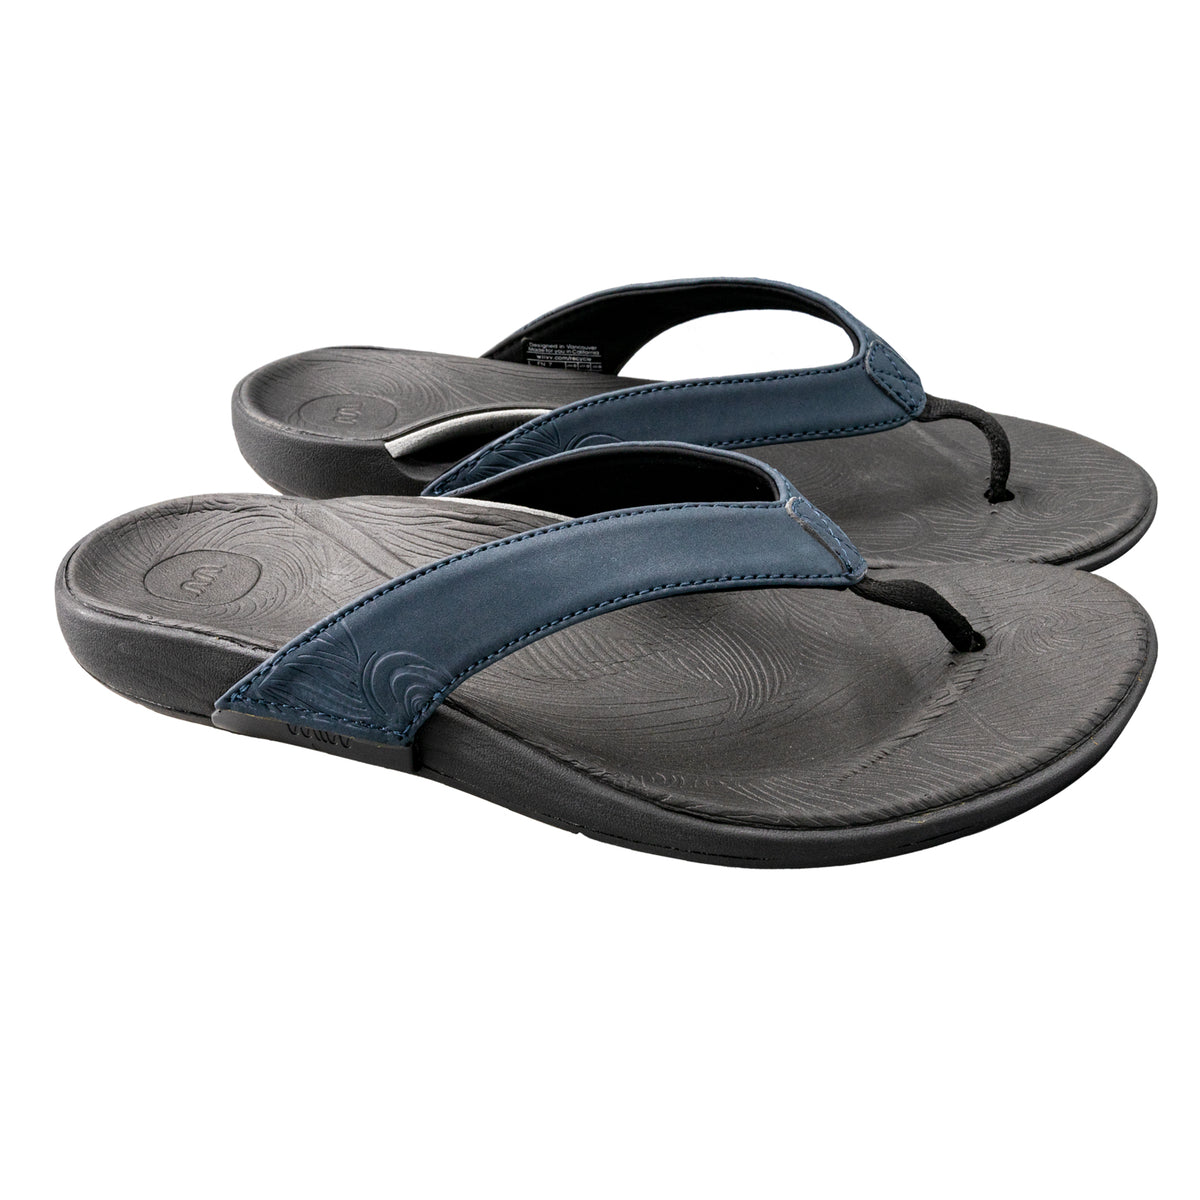 Sandals for Heel Pain & Plantar Fasciitis | Orthotic Shop